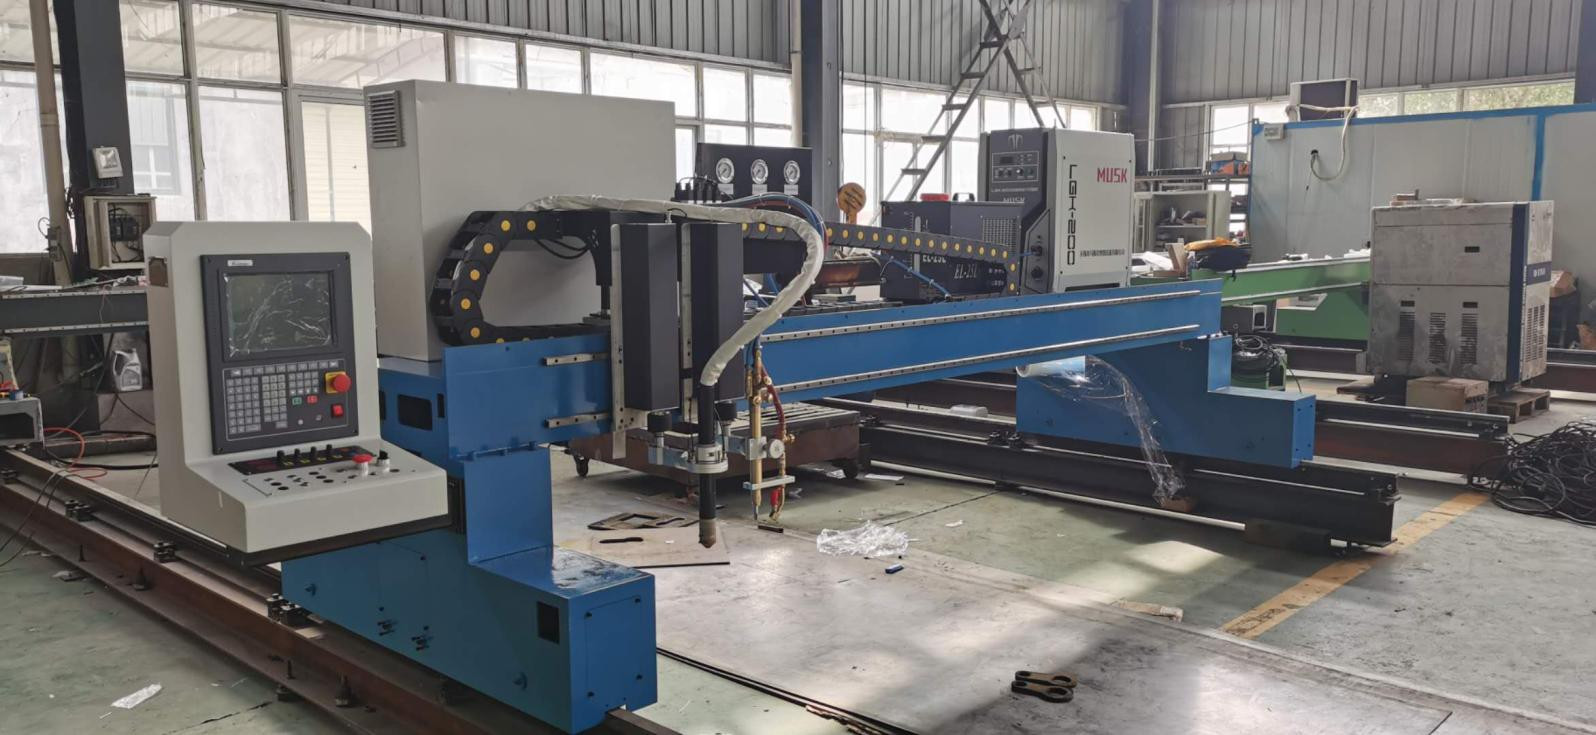 Big size Industrial gantry CNC plasma cutting machine for thick steel (2)